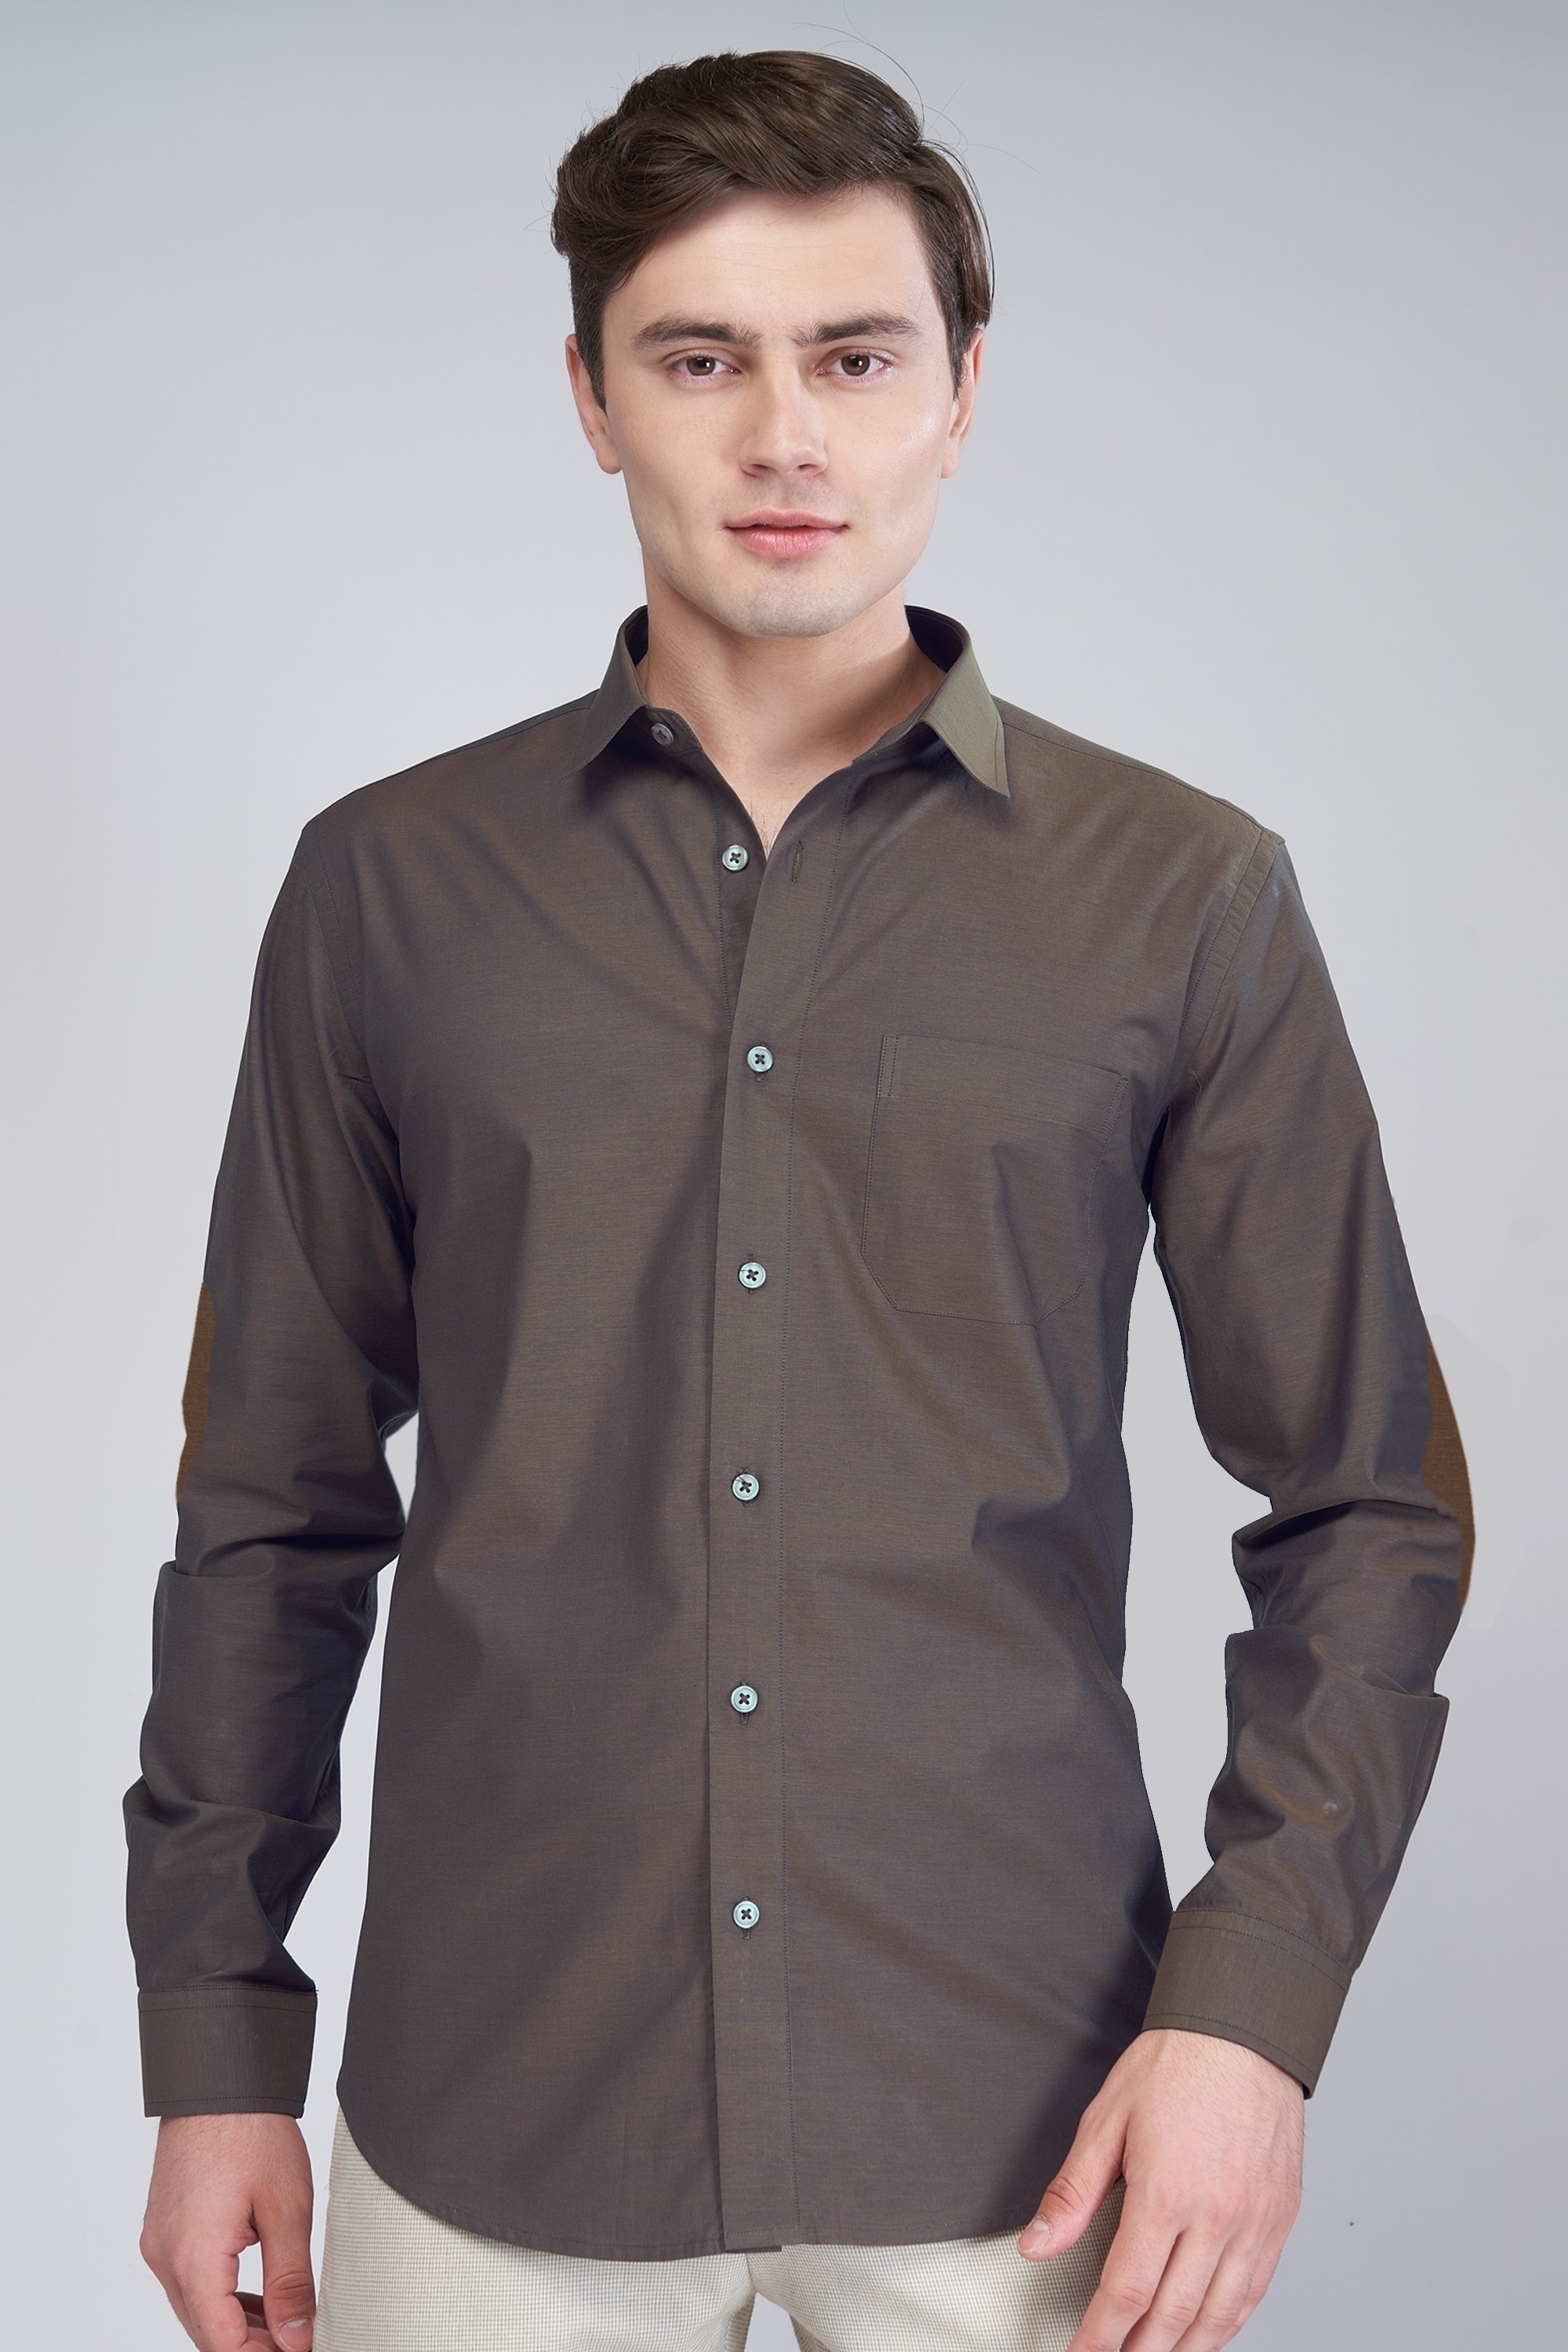 cotton brown shirt for men